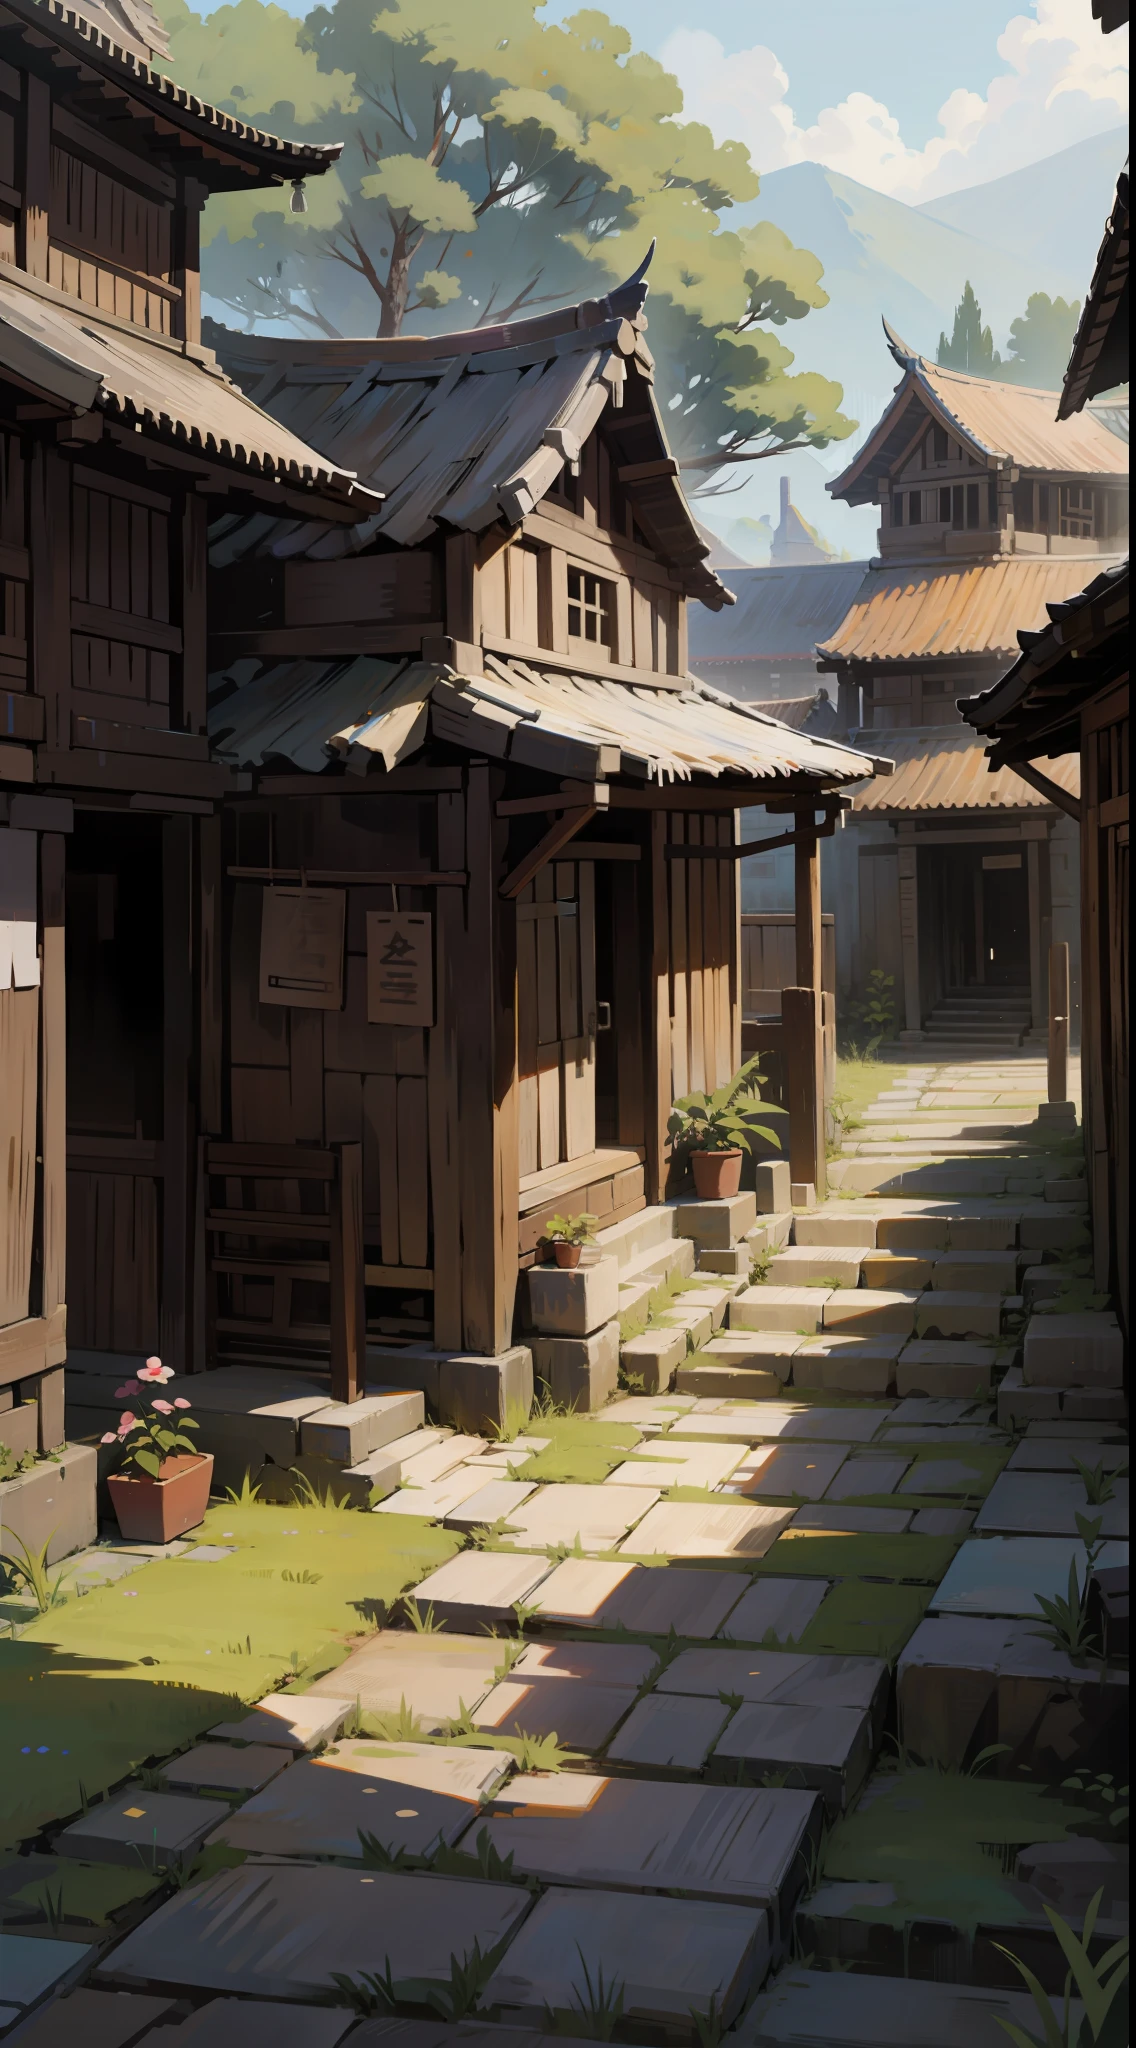 Ancient village